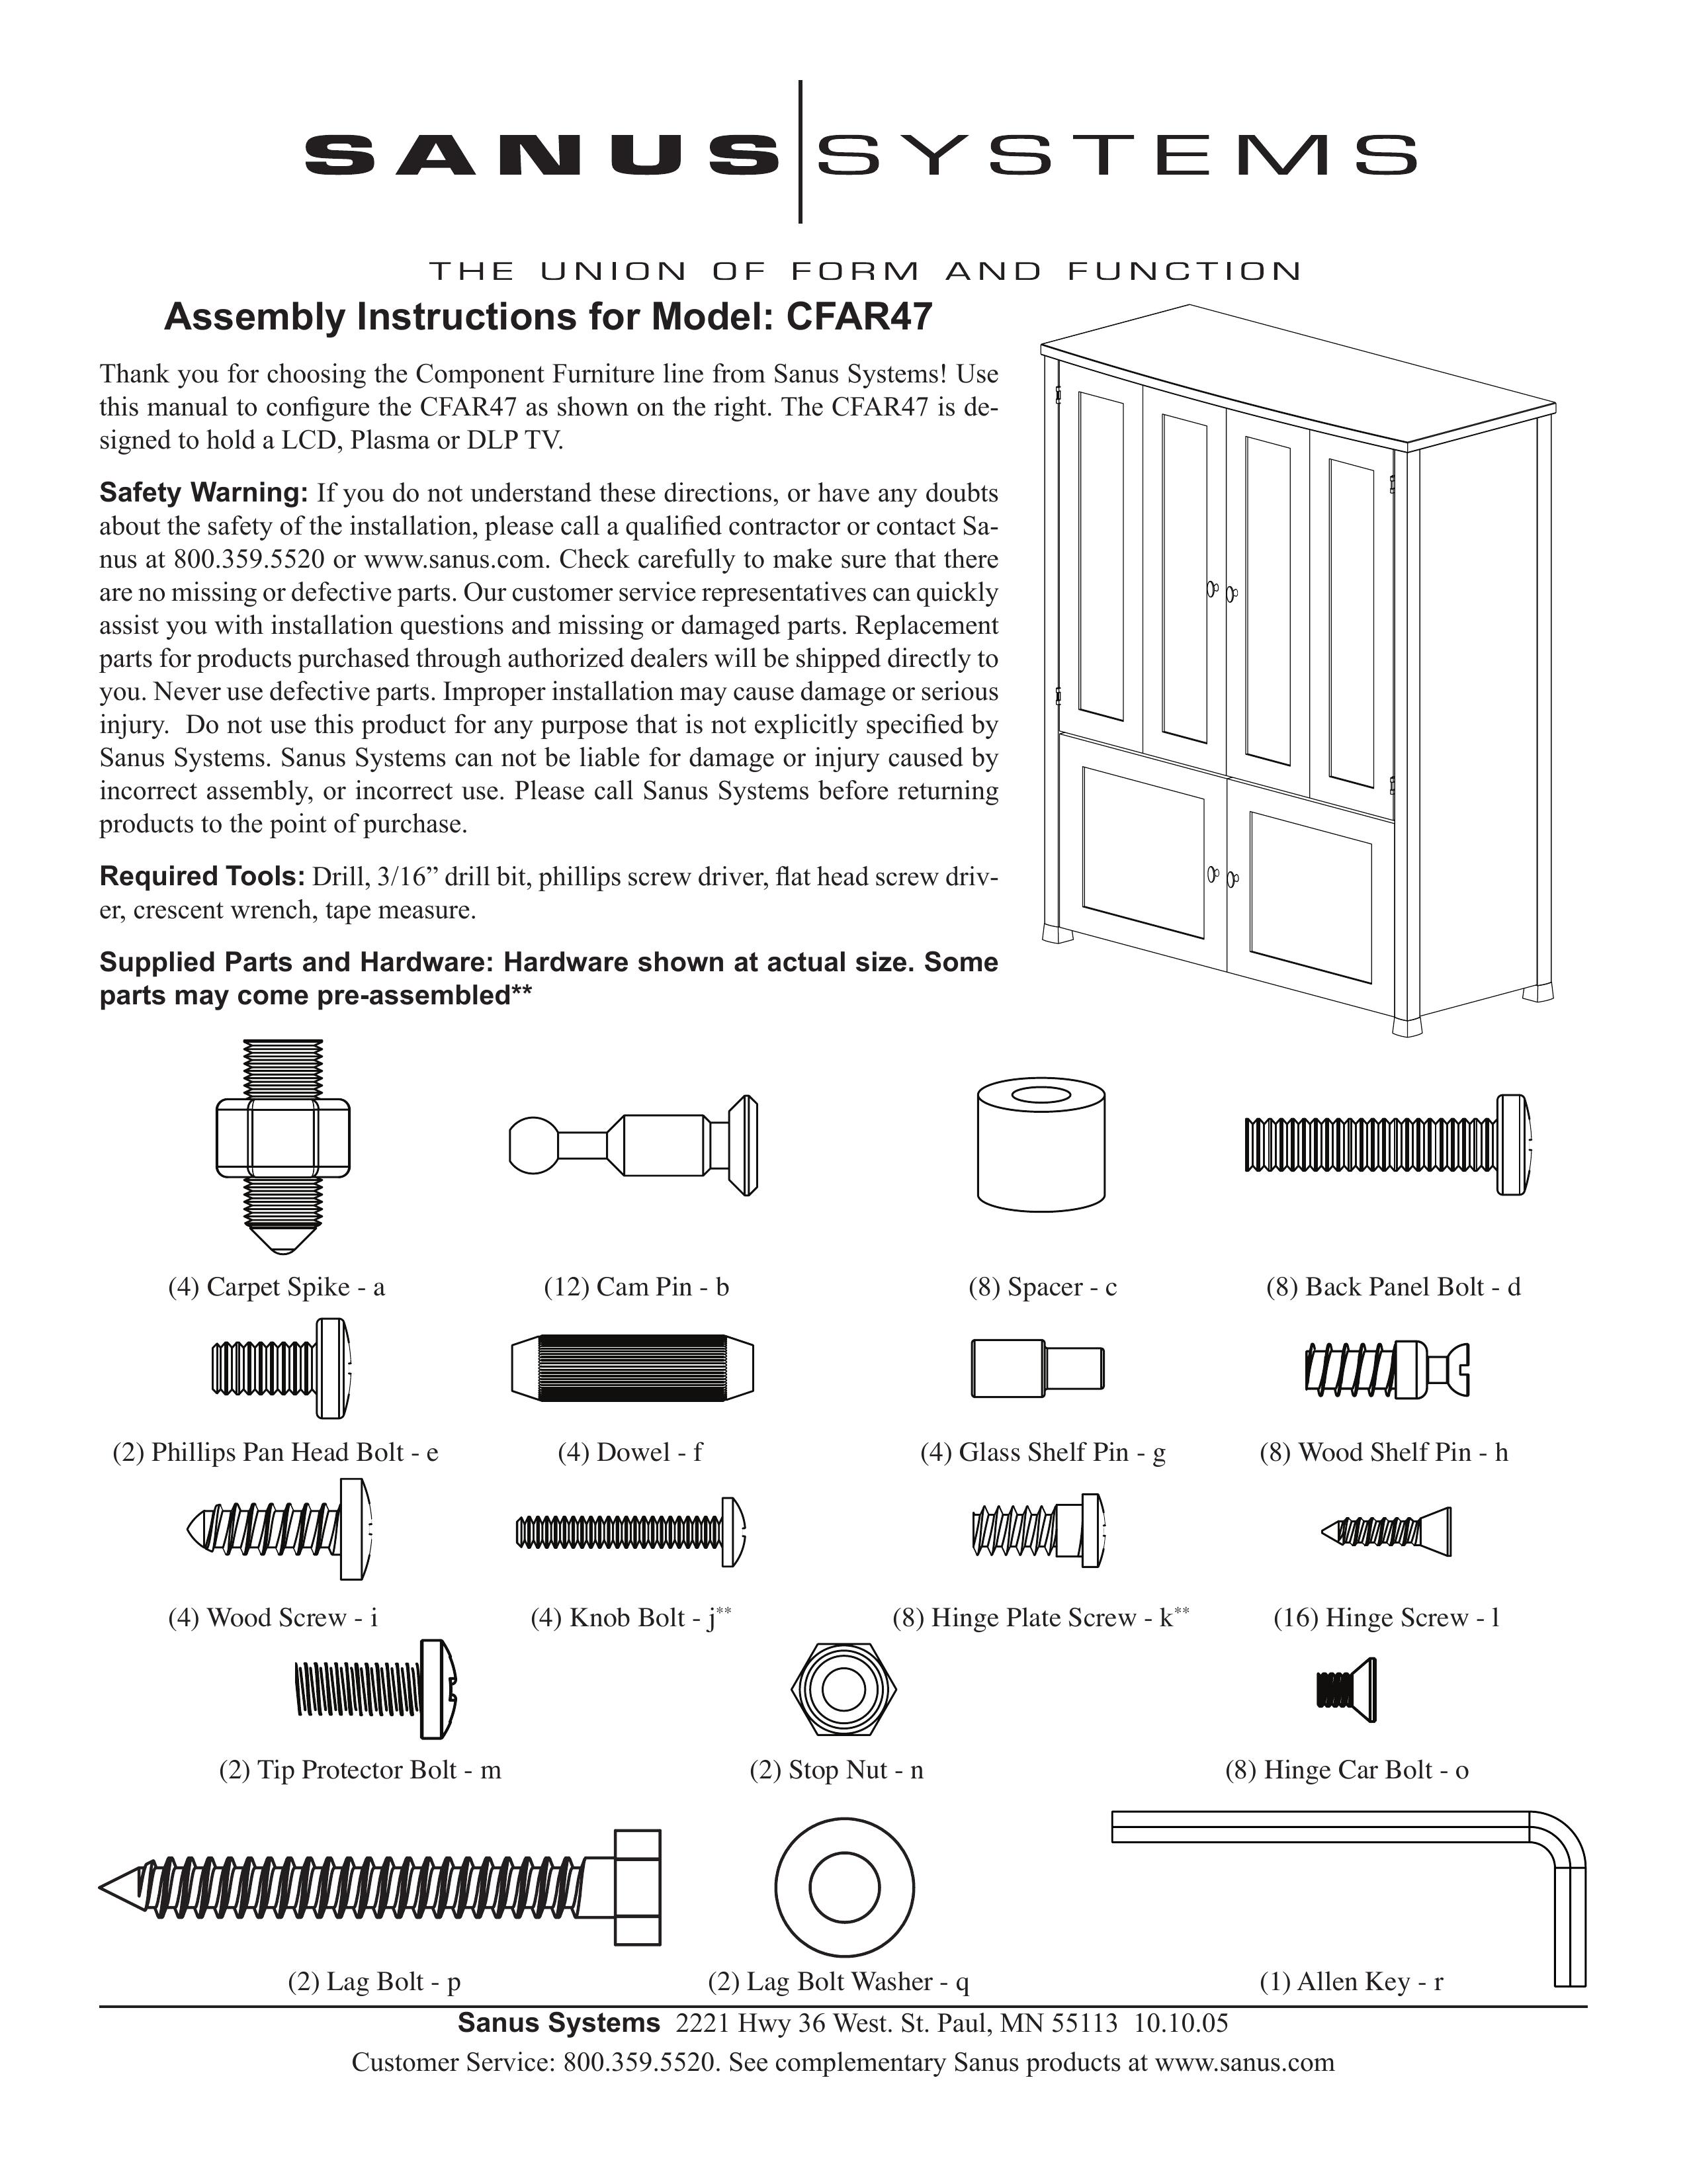 Sanus Systems CFAR47 Patio Furniture User Manual